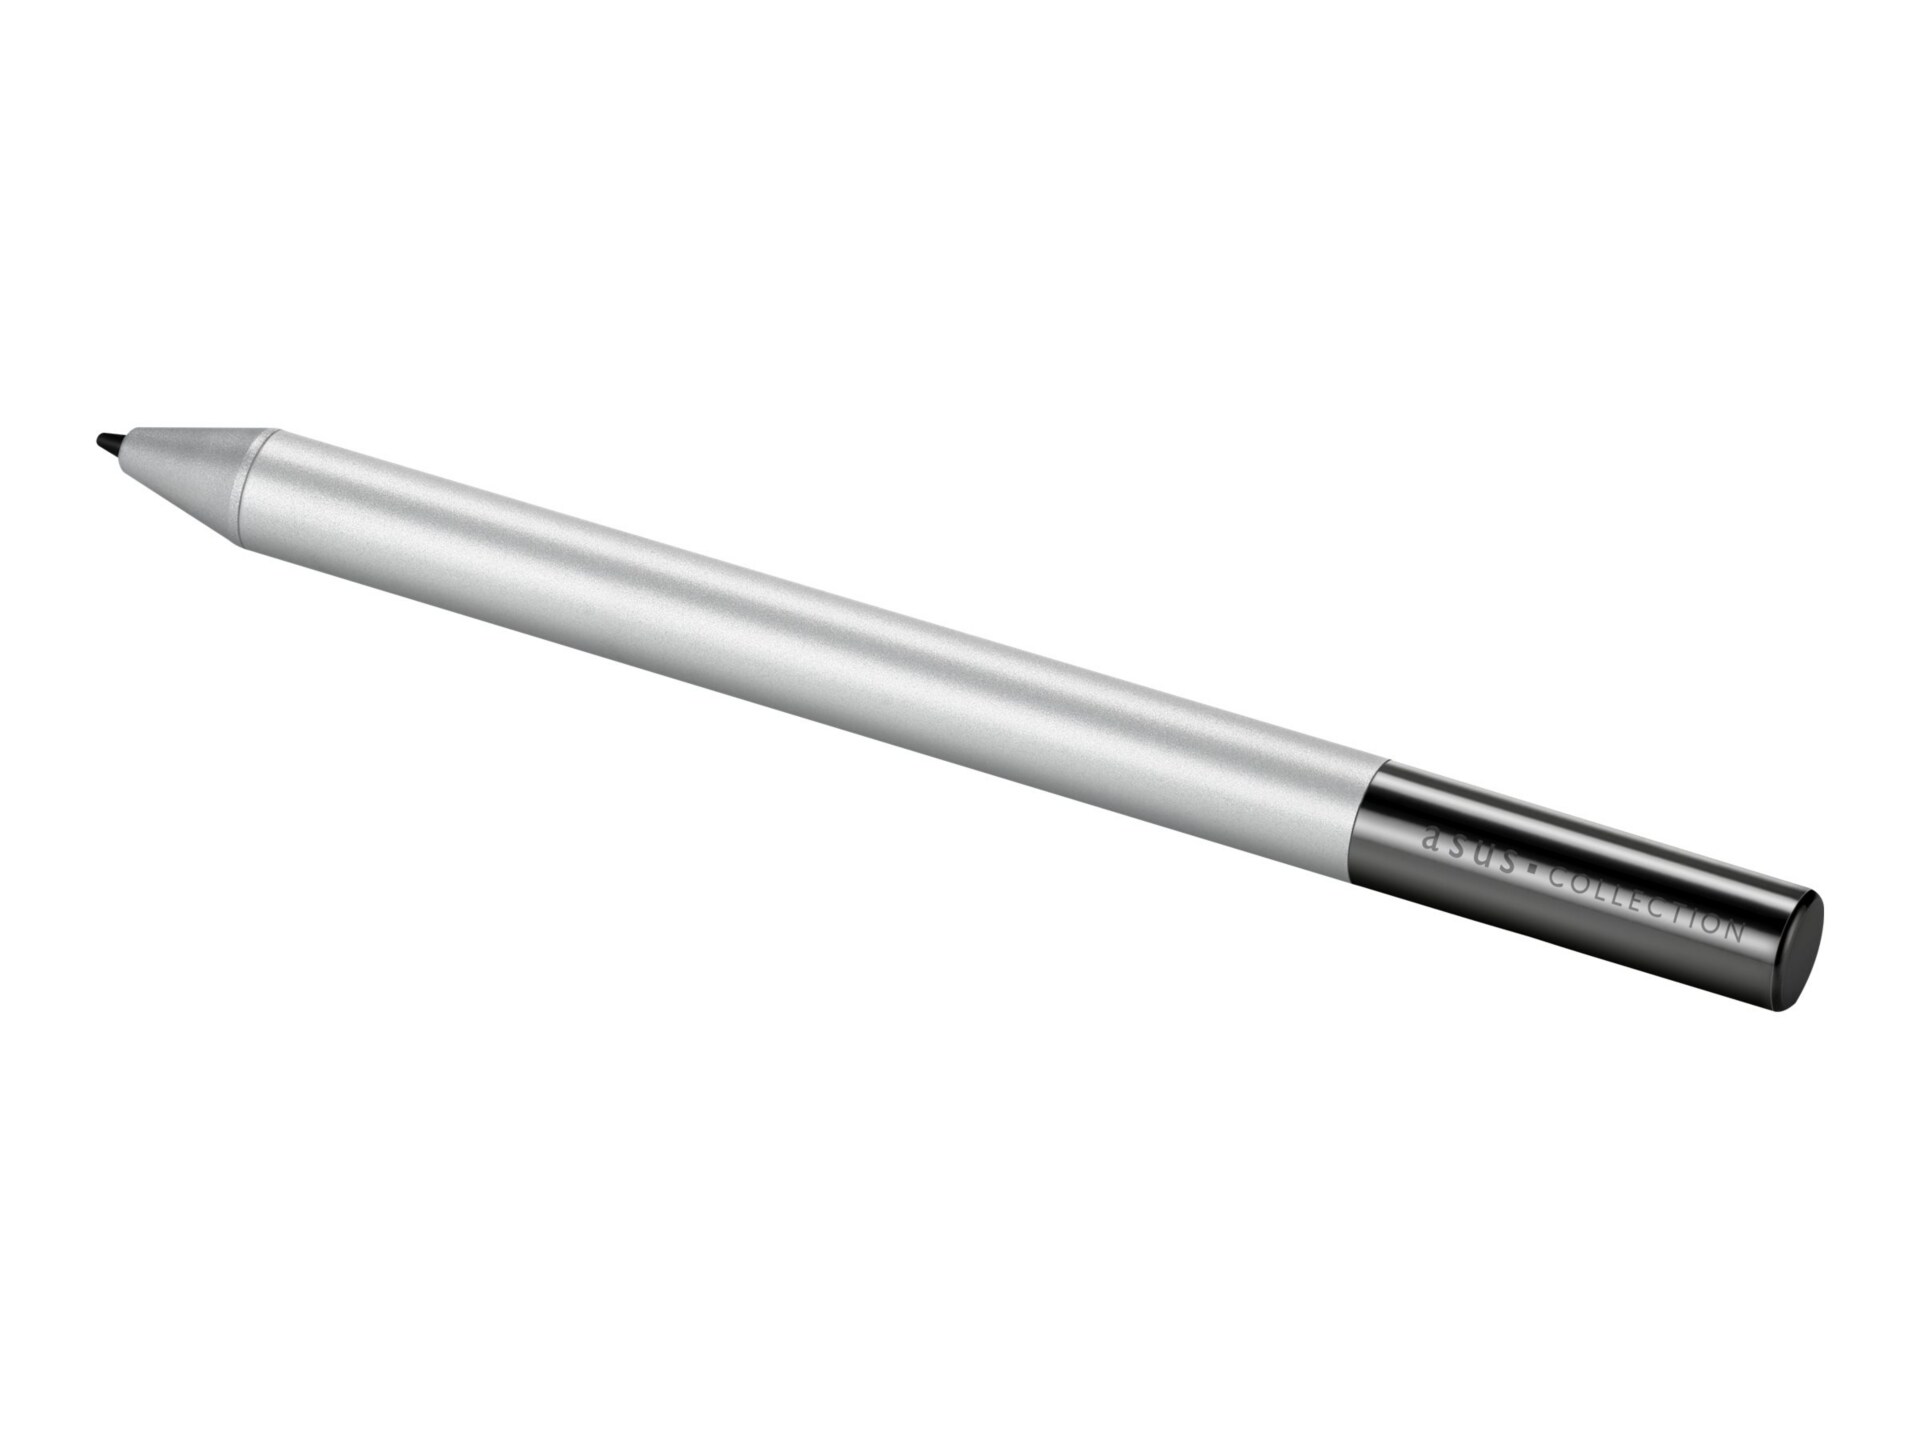 Asus Pen SA300 - active stylus